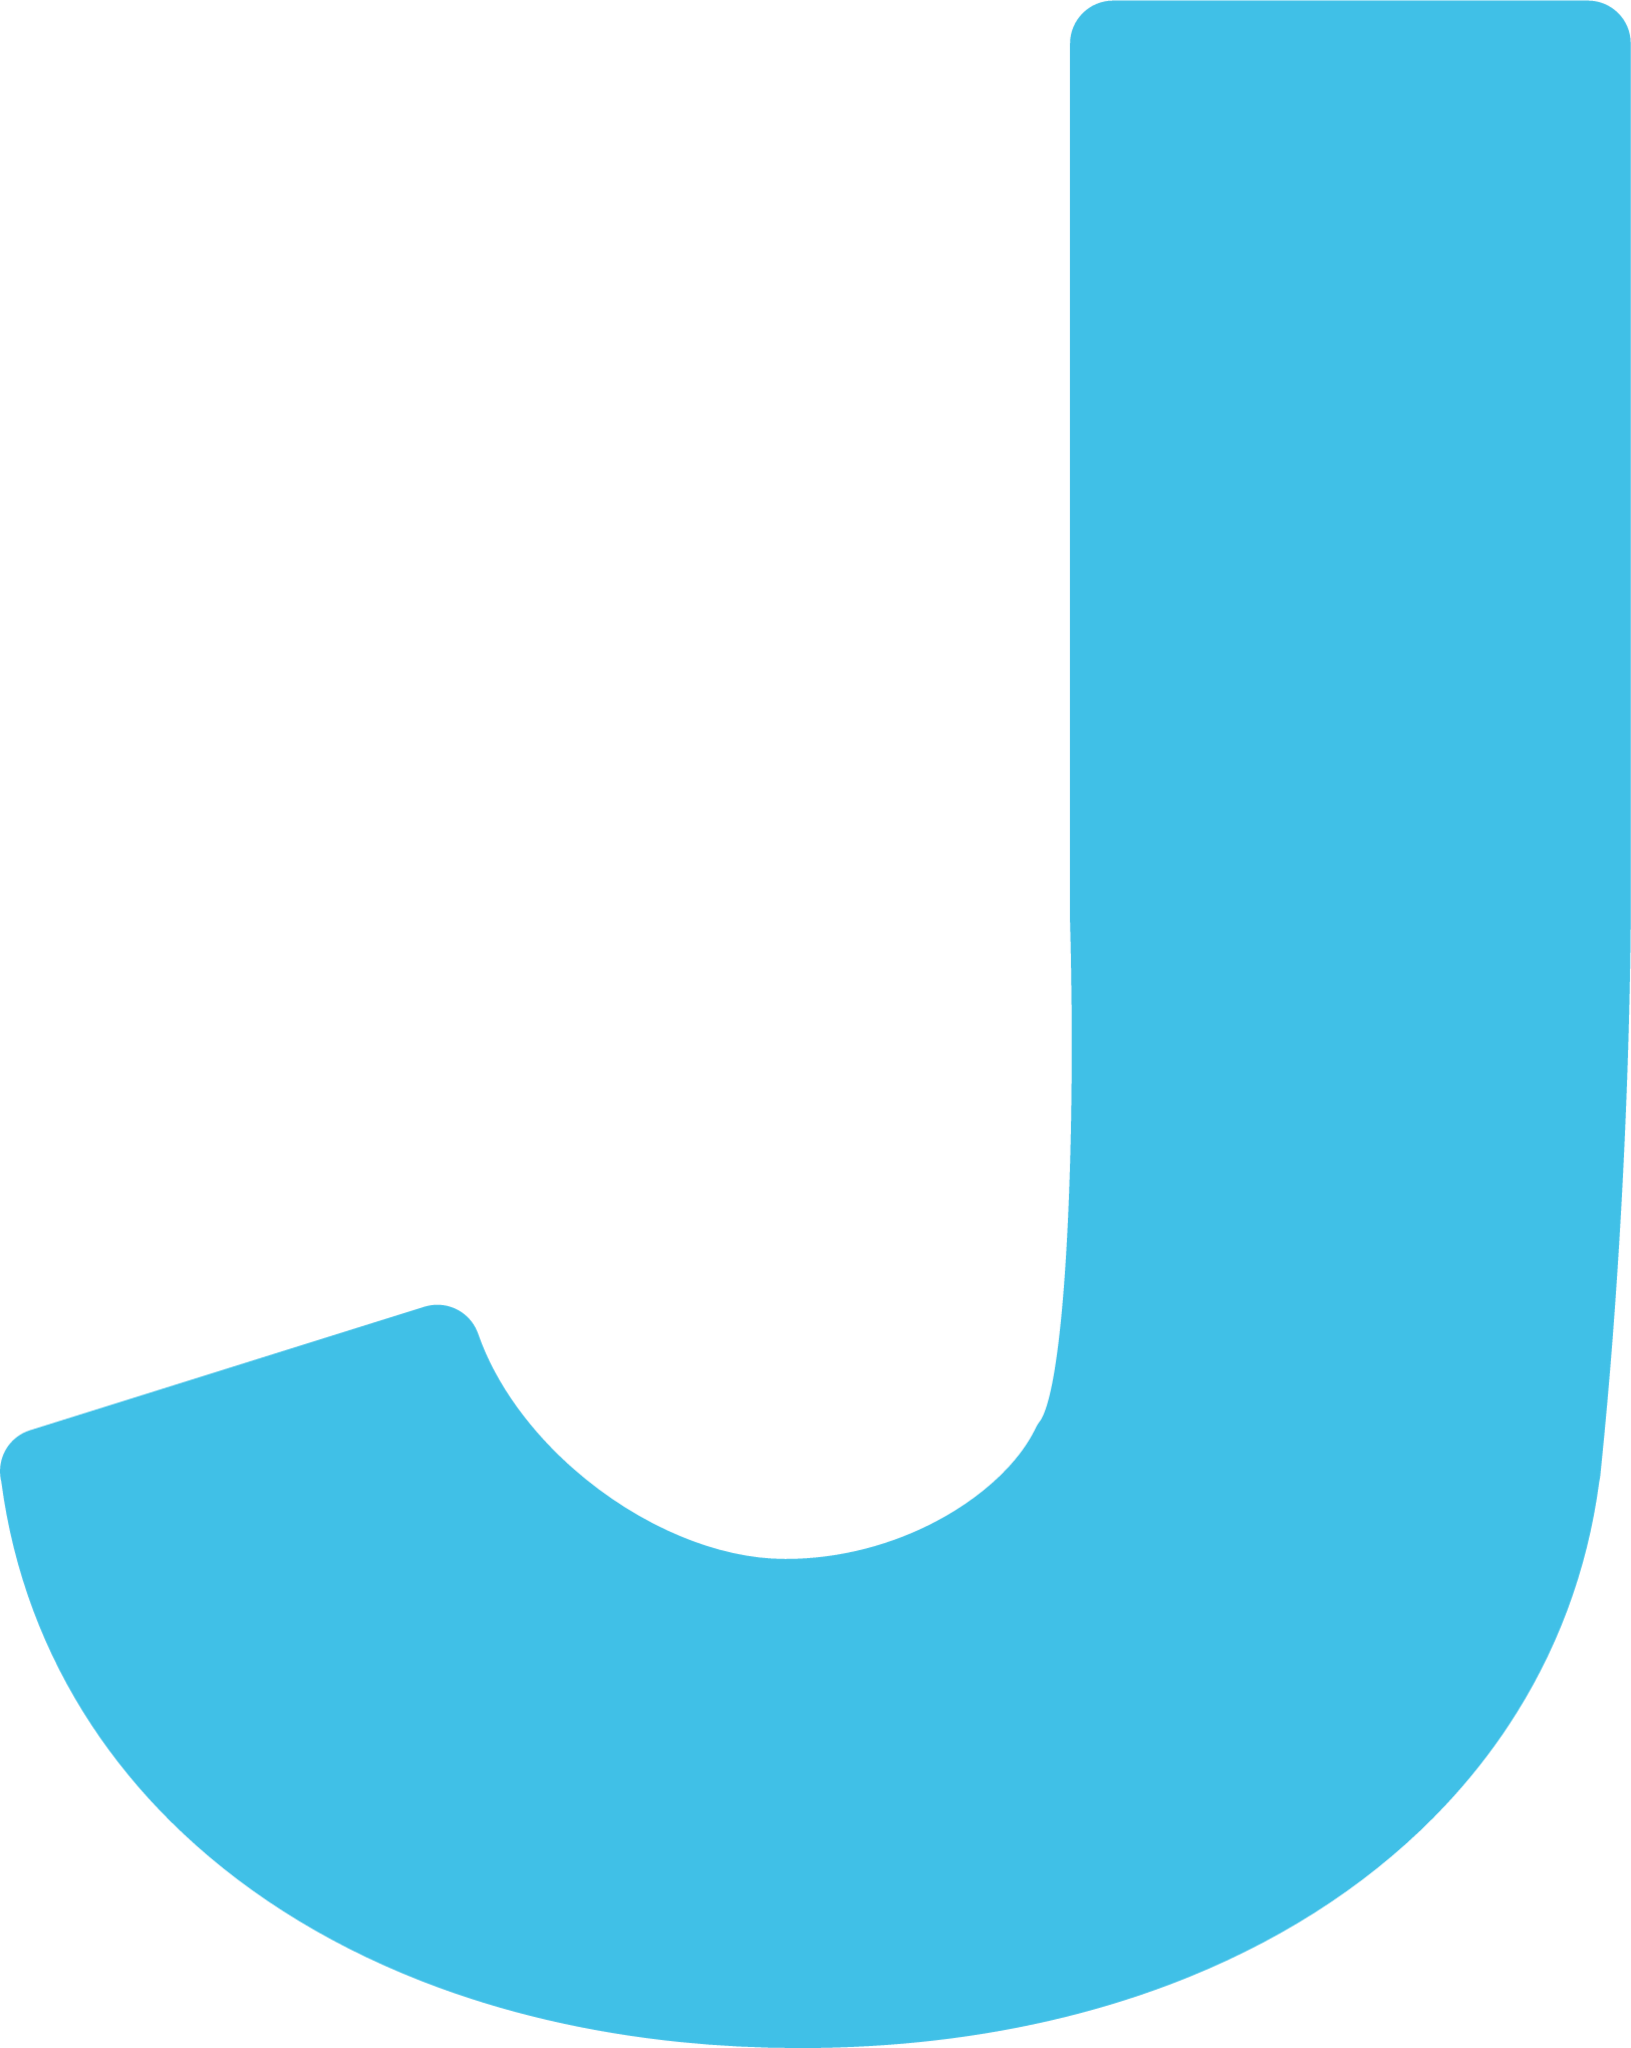 regional indicator symbol letter j emoji